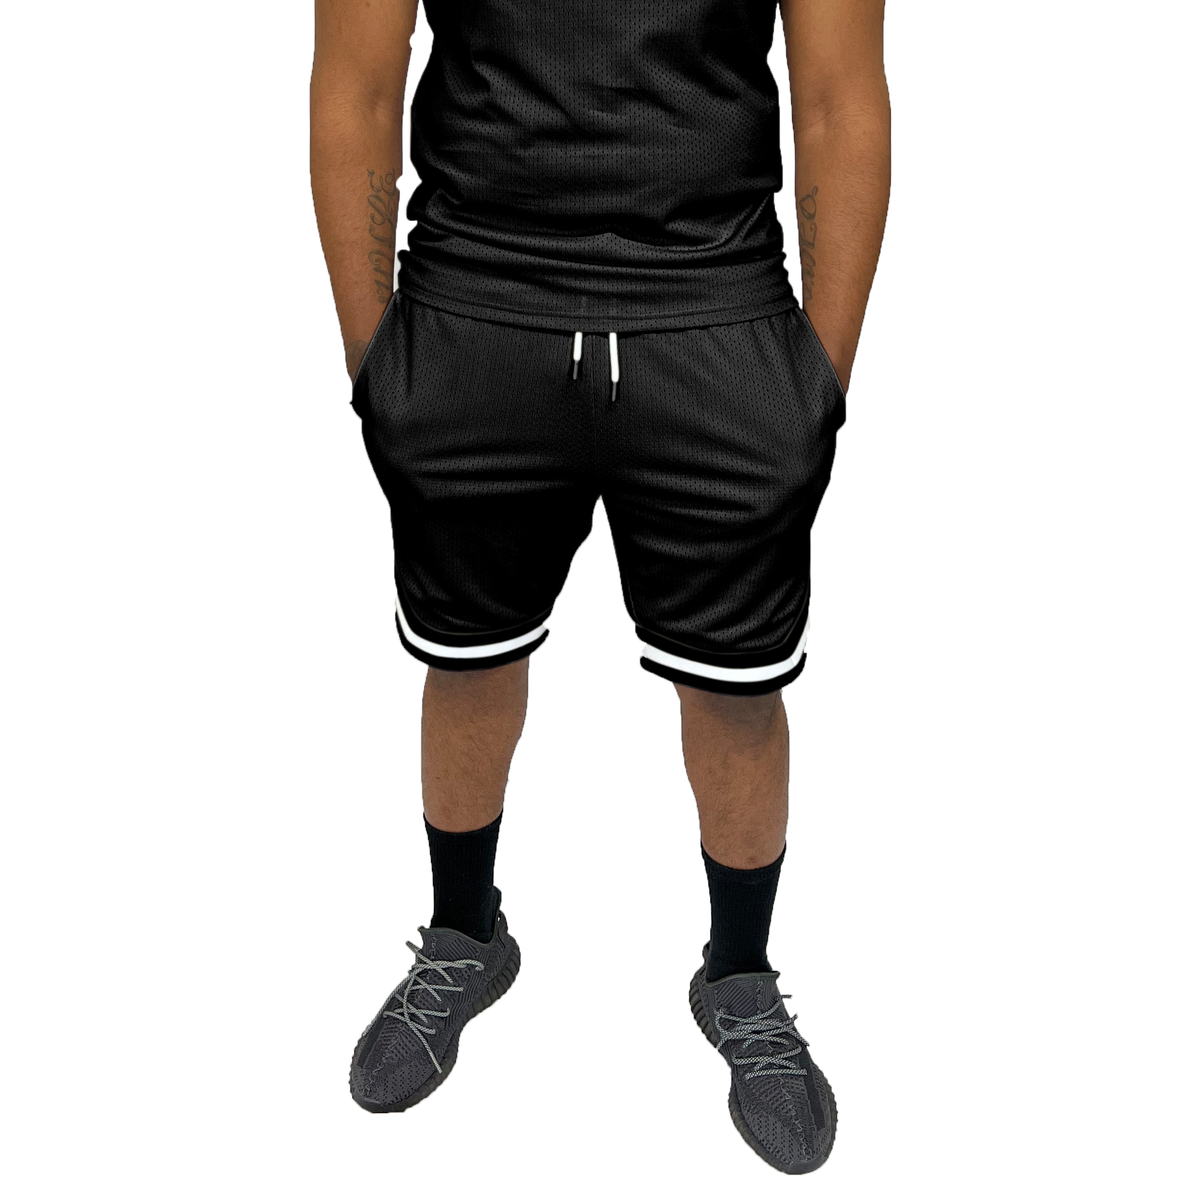 Basketball Shorts - Black/White